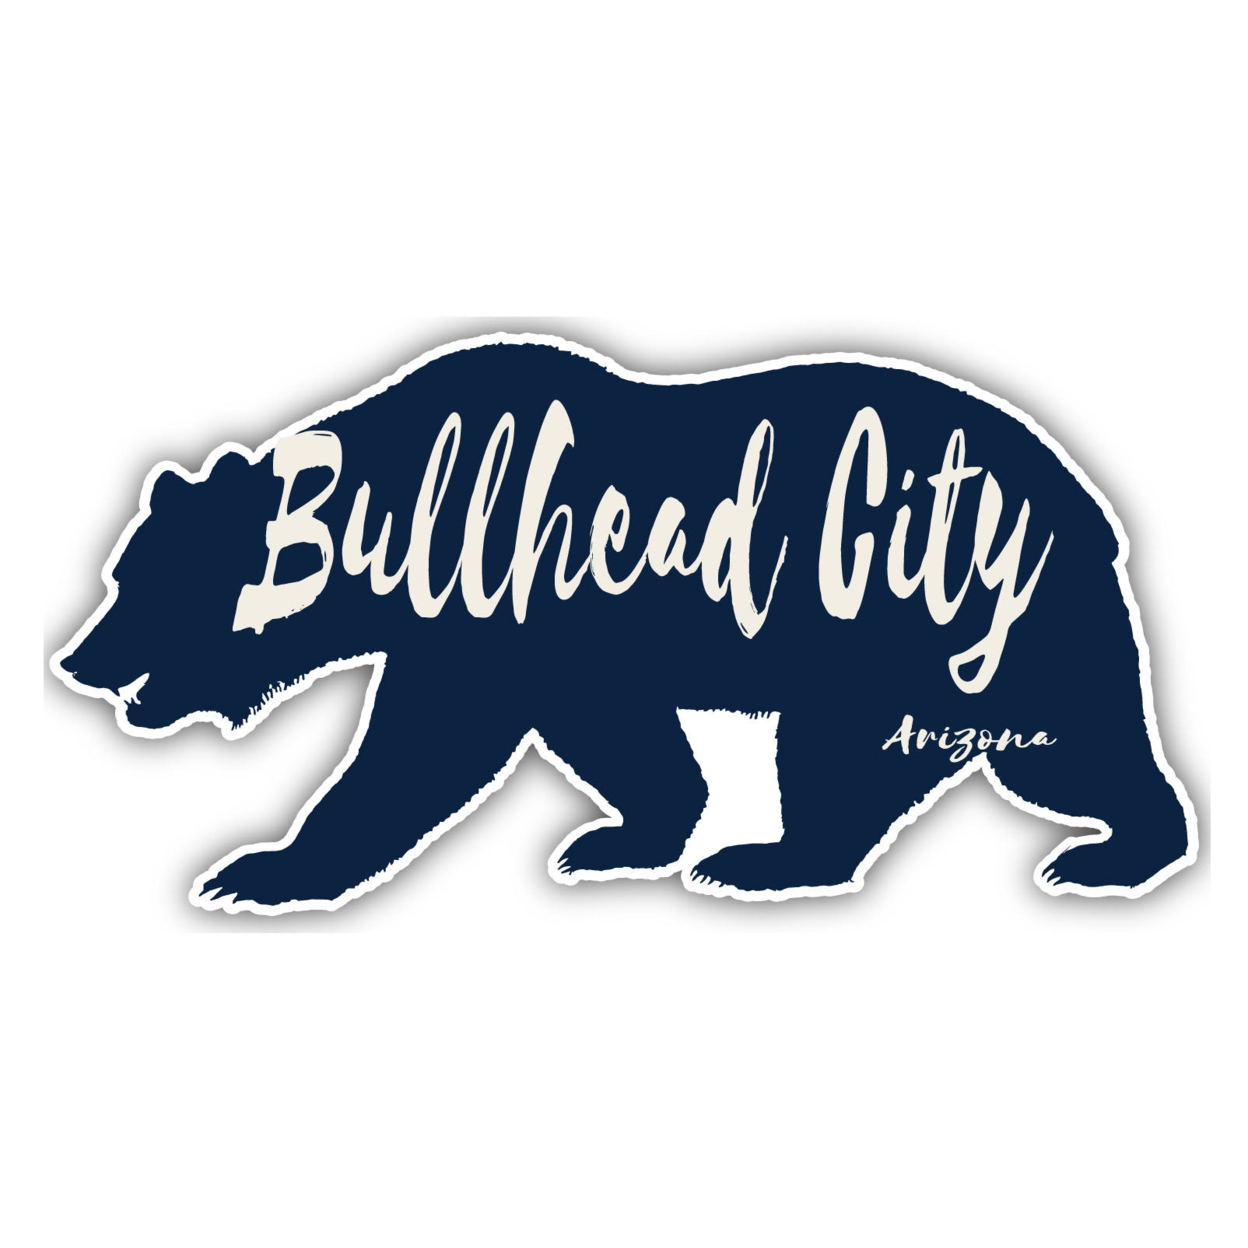 Bullhead City Arizona Souvenir Decorative Stickers (Choose Theme And Size) - 4-Pack, 12-Inch, Bear